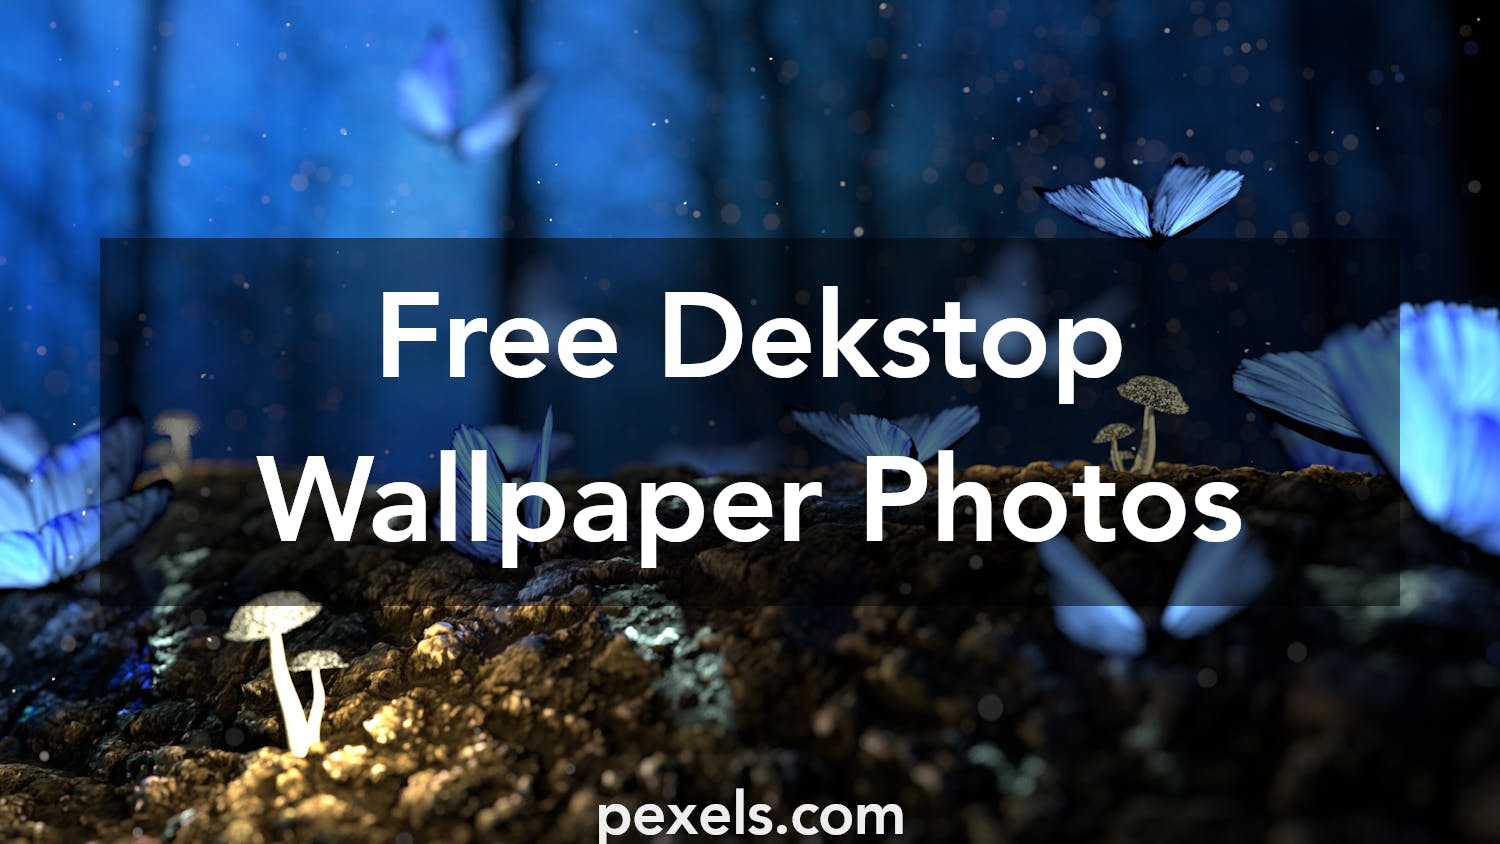 1000+ Great Dekstop Wallpaper Photos · Pexels · Free Stock Photos